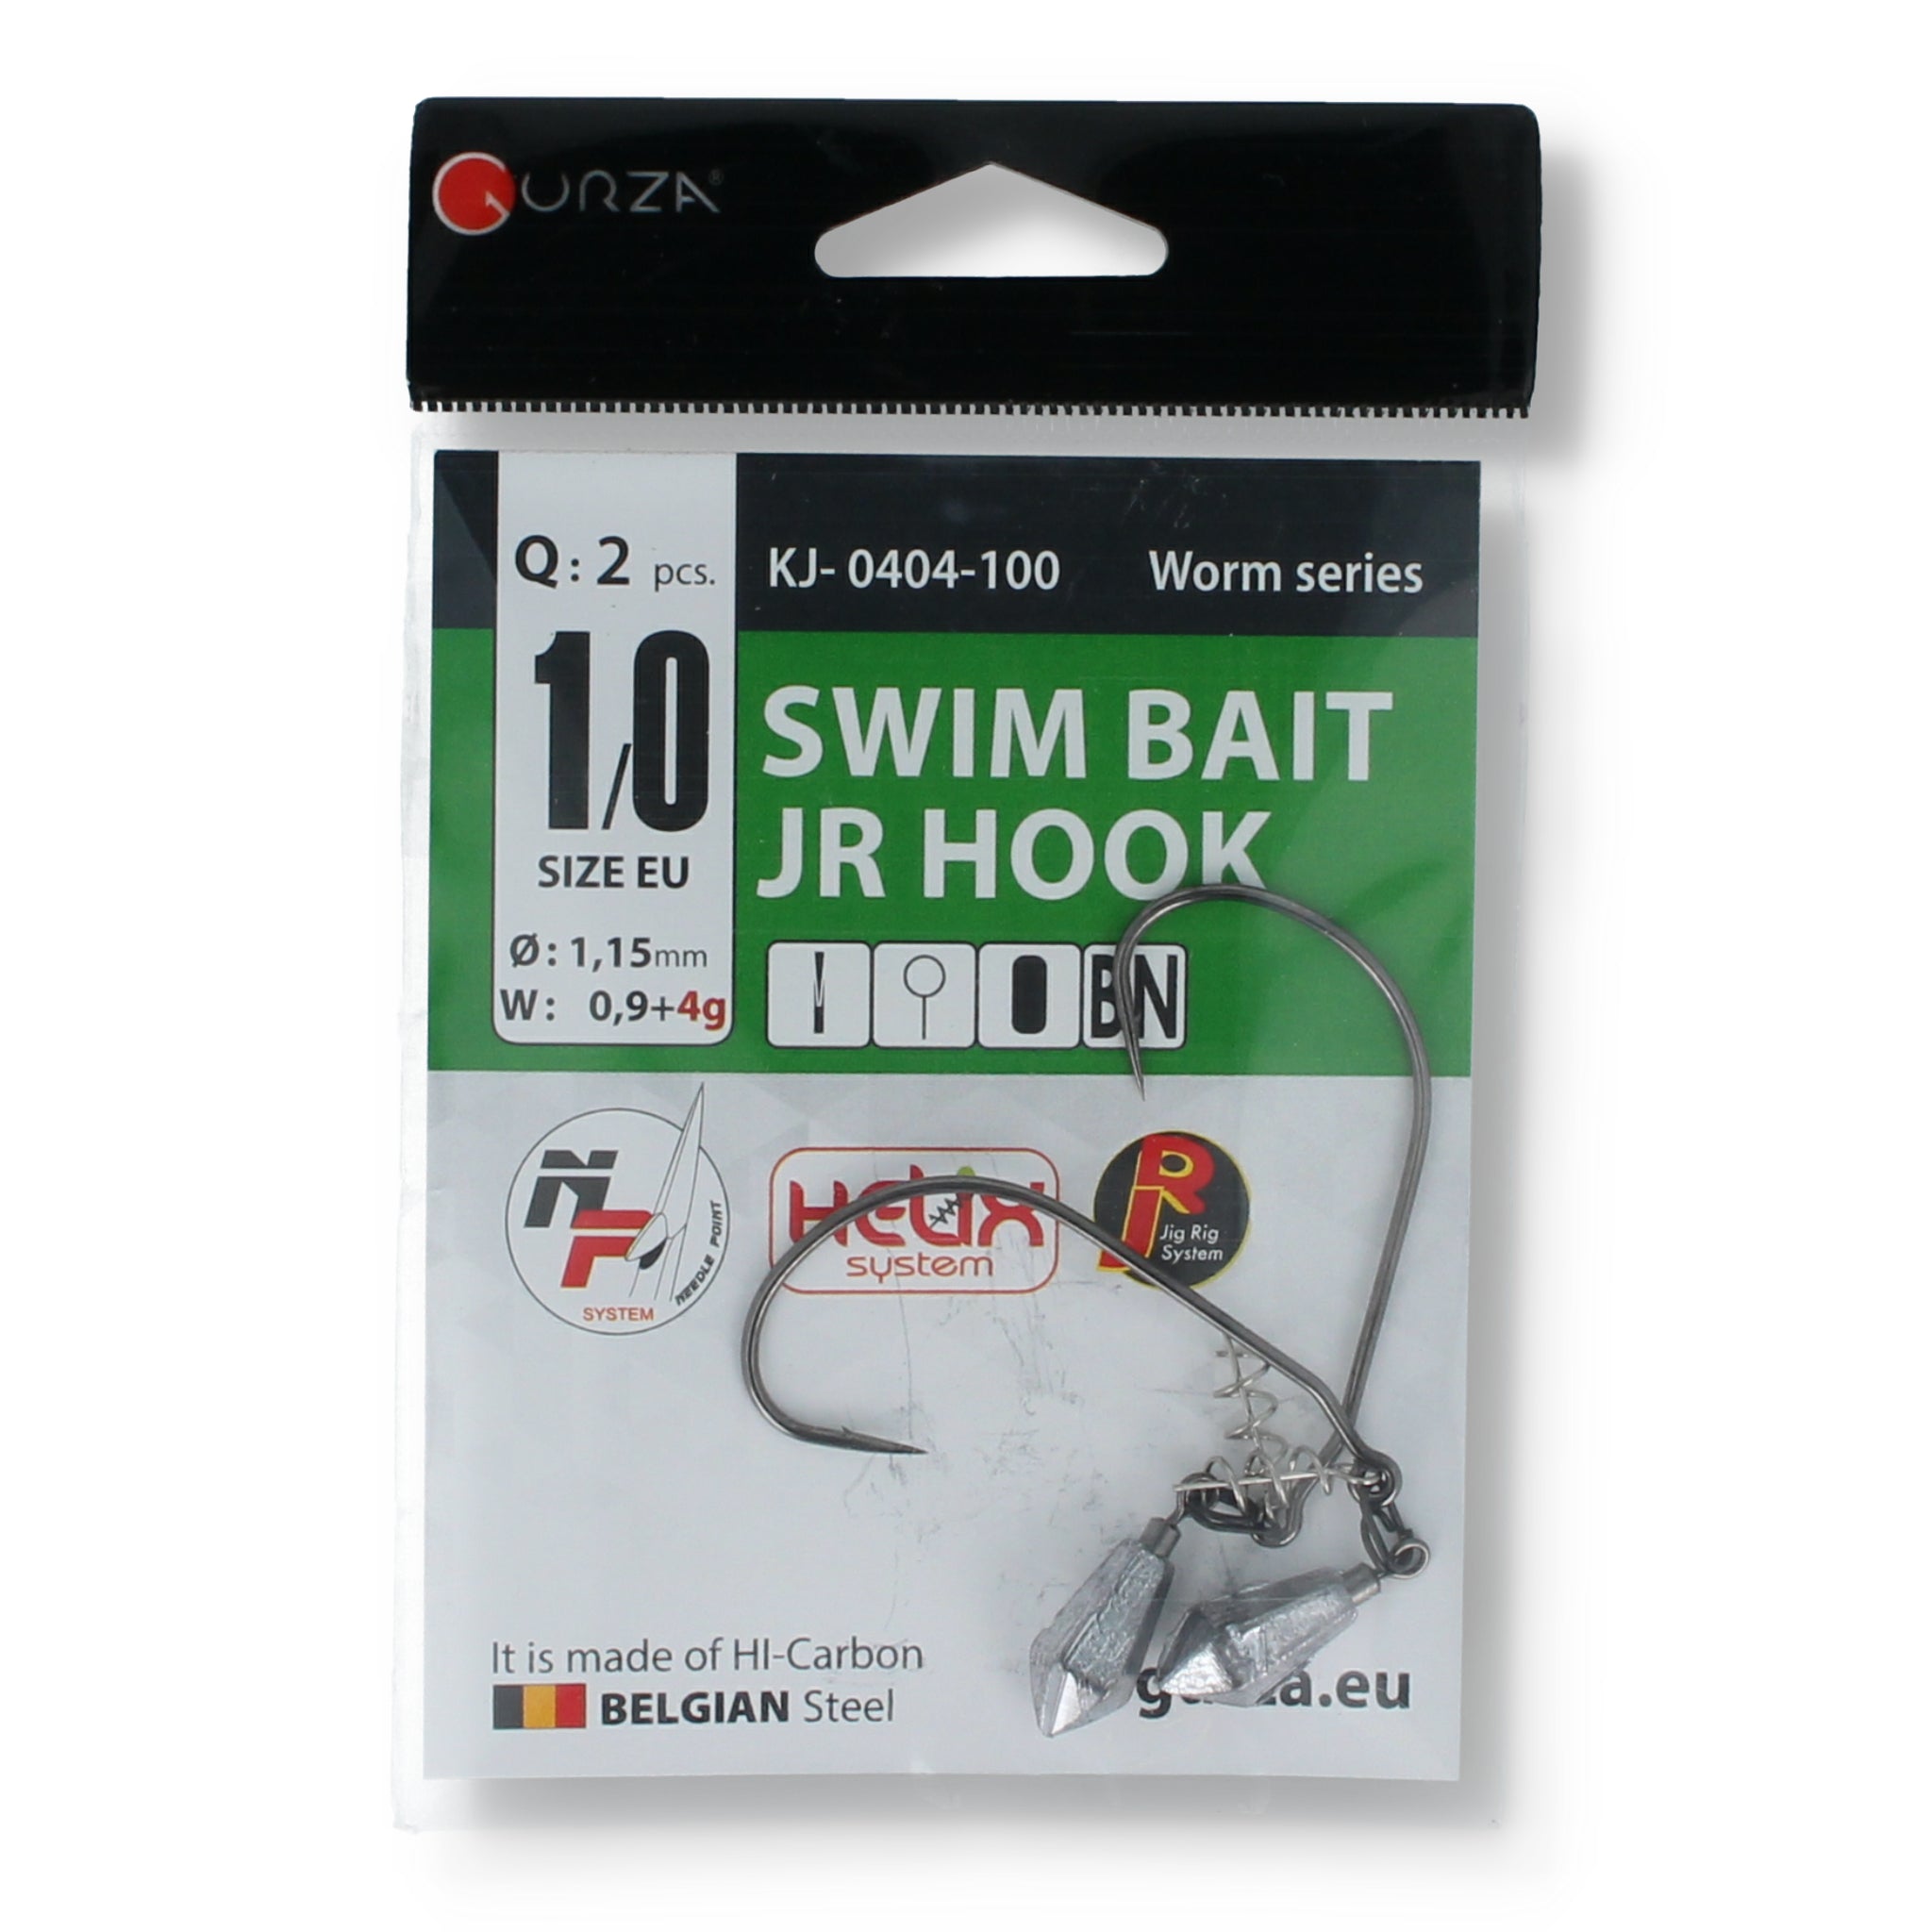 Gurza Swim Bait JR Hook